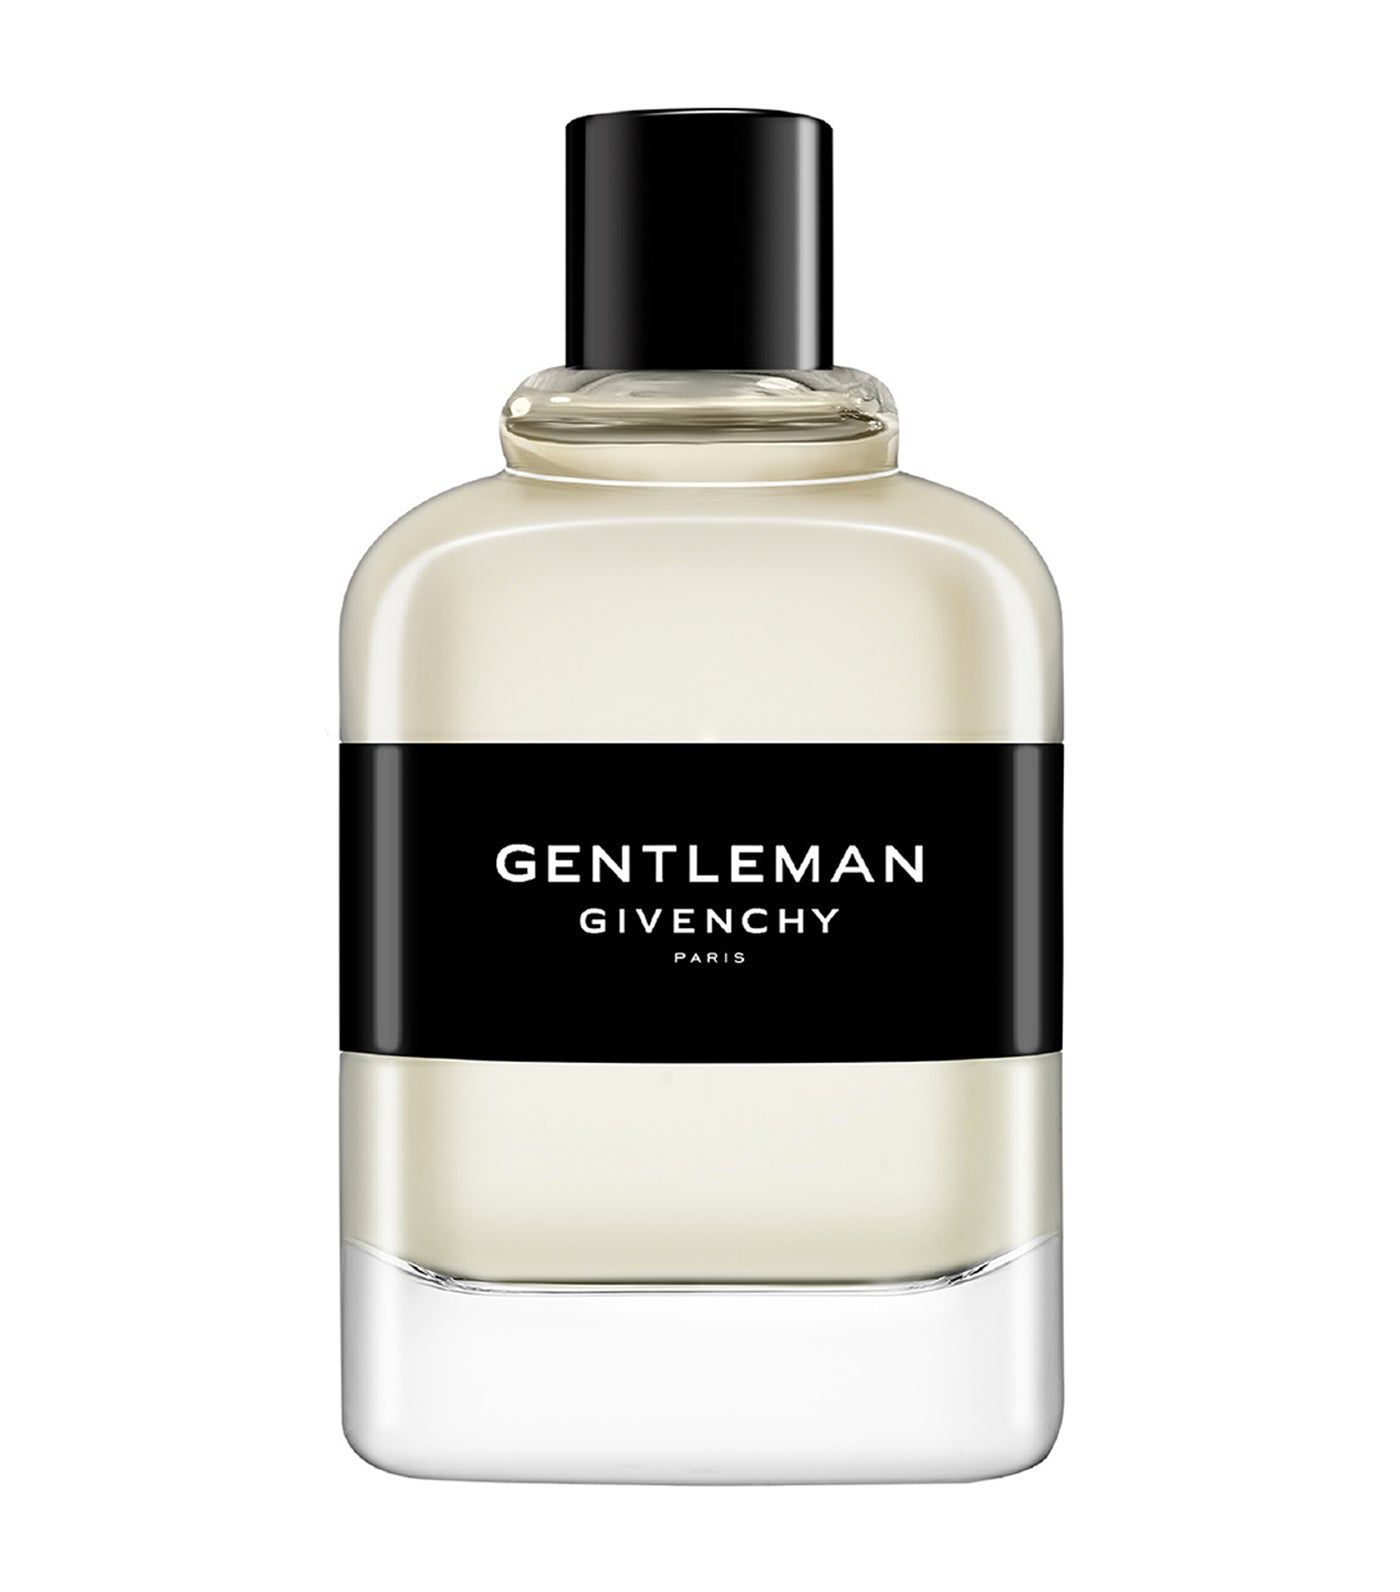 GENTLEMAN GIVENCHY Eau de Toilette by Parfums Givenchy